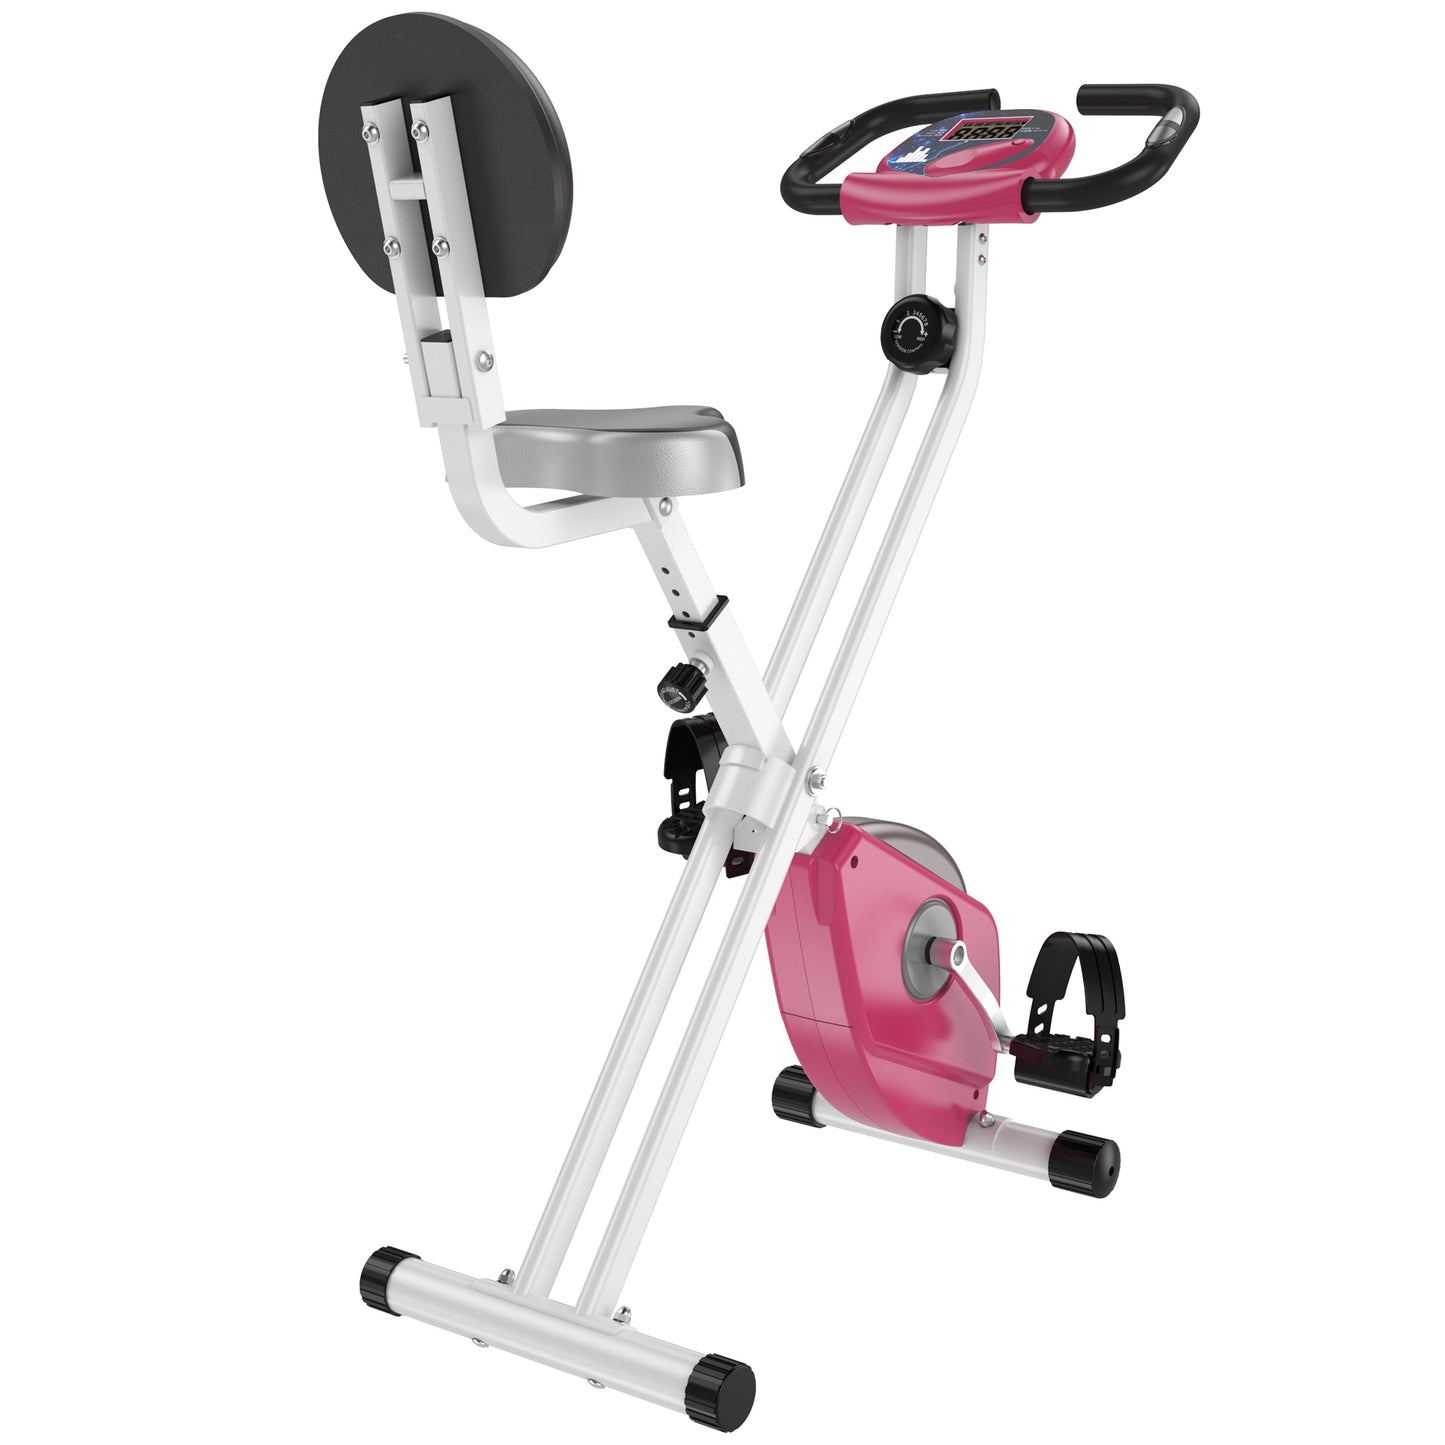 HOMCOM Manual Resistance Exercise Bike Foldable w/ LCD Monitor Adjustable Seat Pink